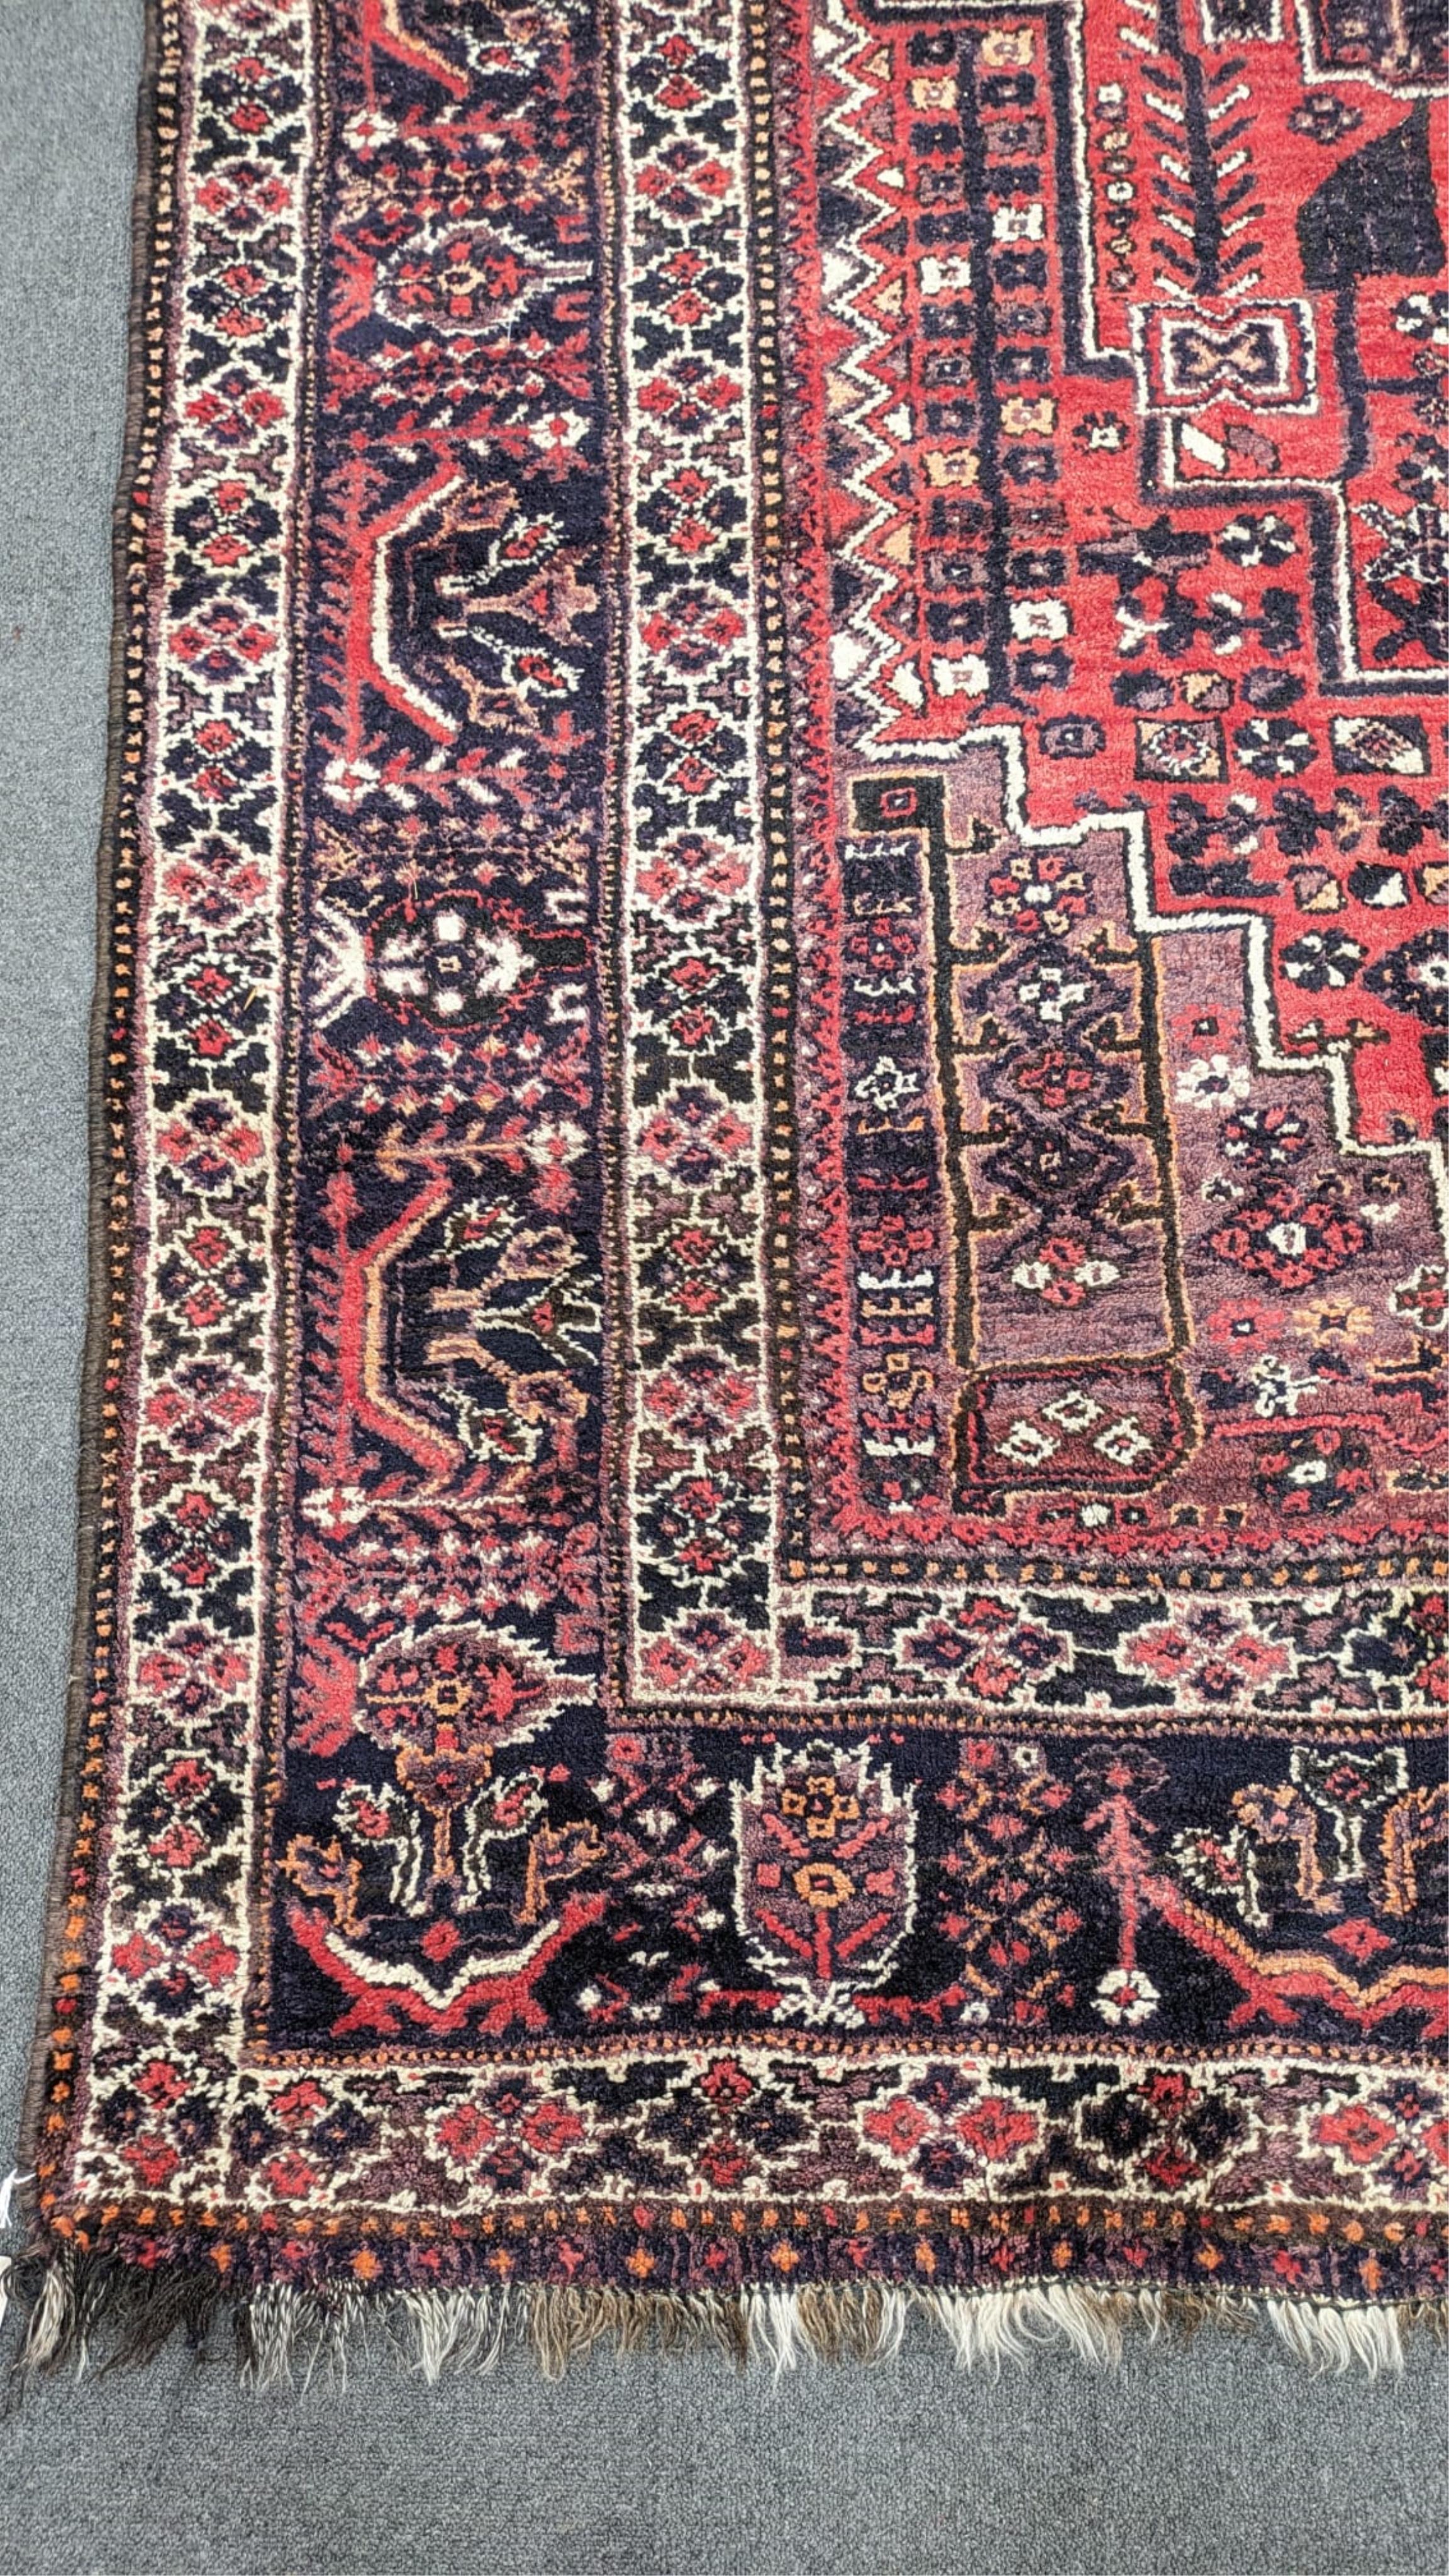 A Persian Shiraz carpet, 300 x 210cm